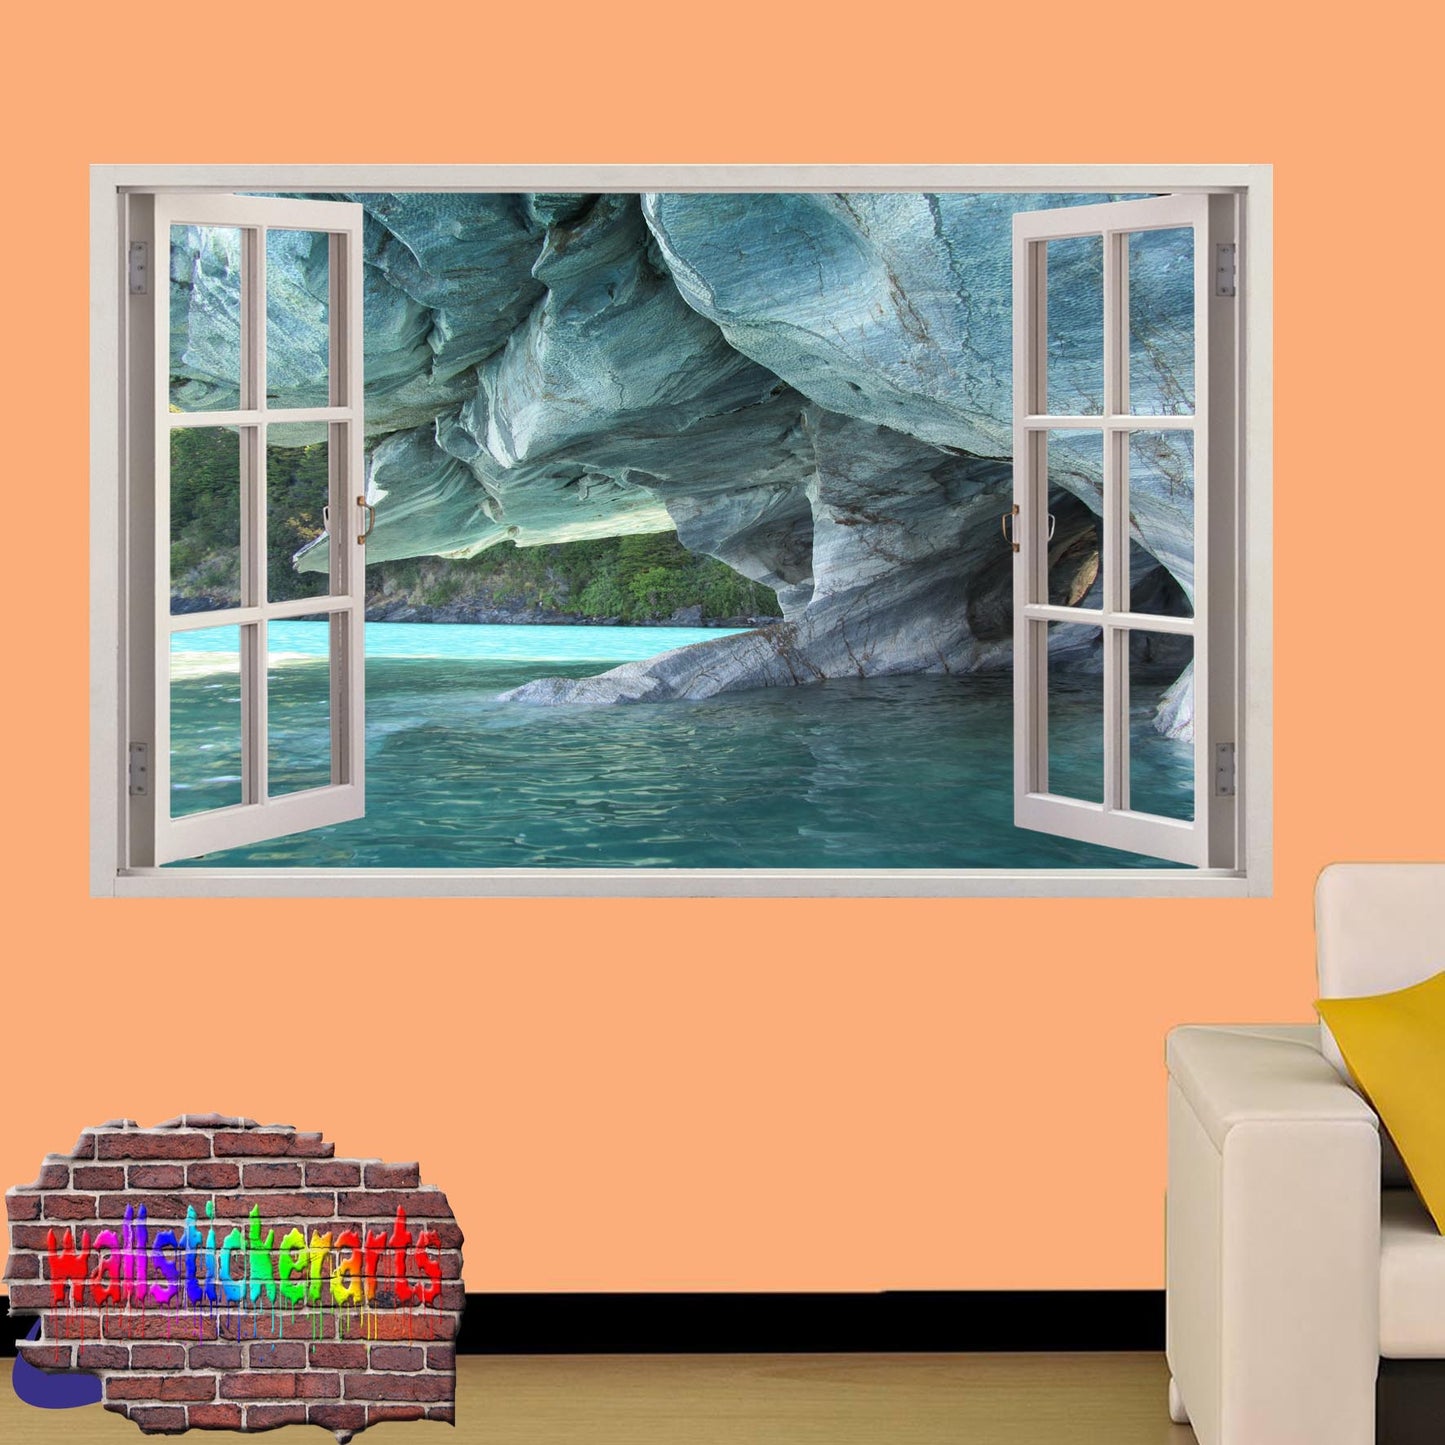 Blue Lagoon Sea Cave 3d Art Wall Sticker Mural Room Office Shop Home Decor Decal ZK6